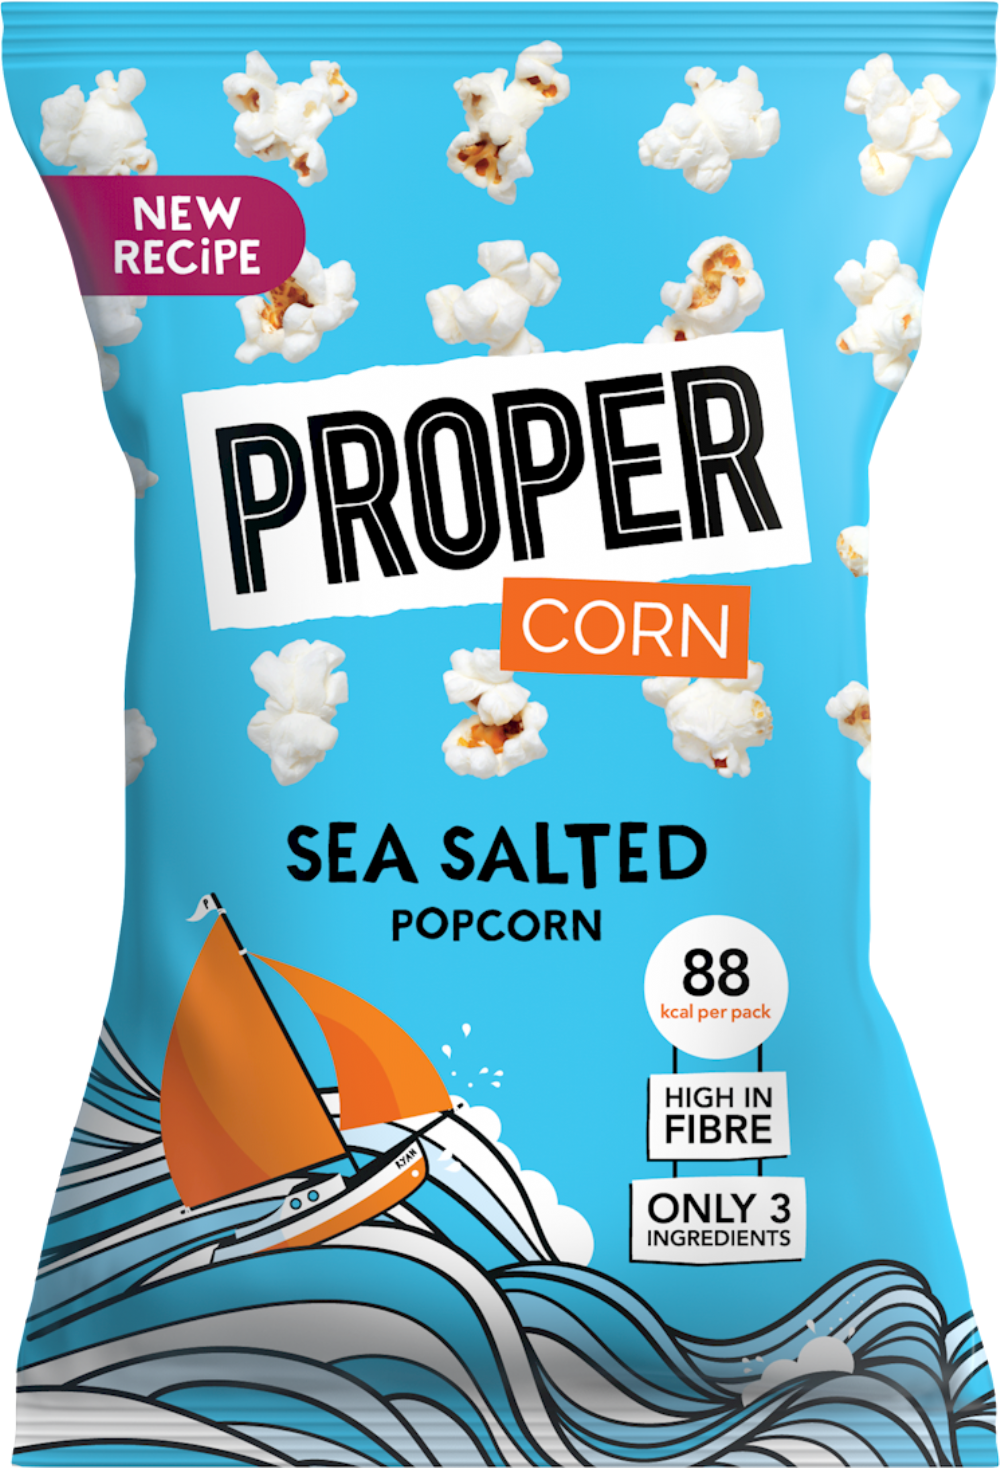 PROPER Corn - Sea Salted Popcorn 20g